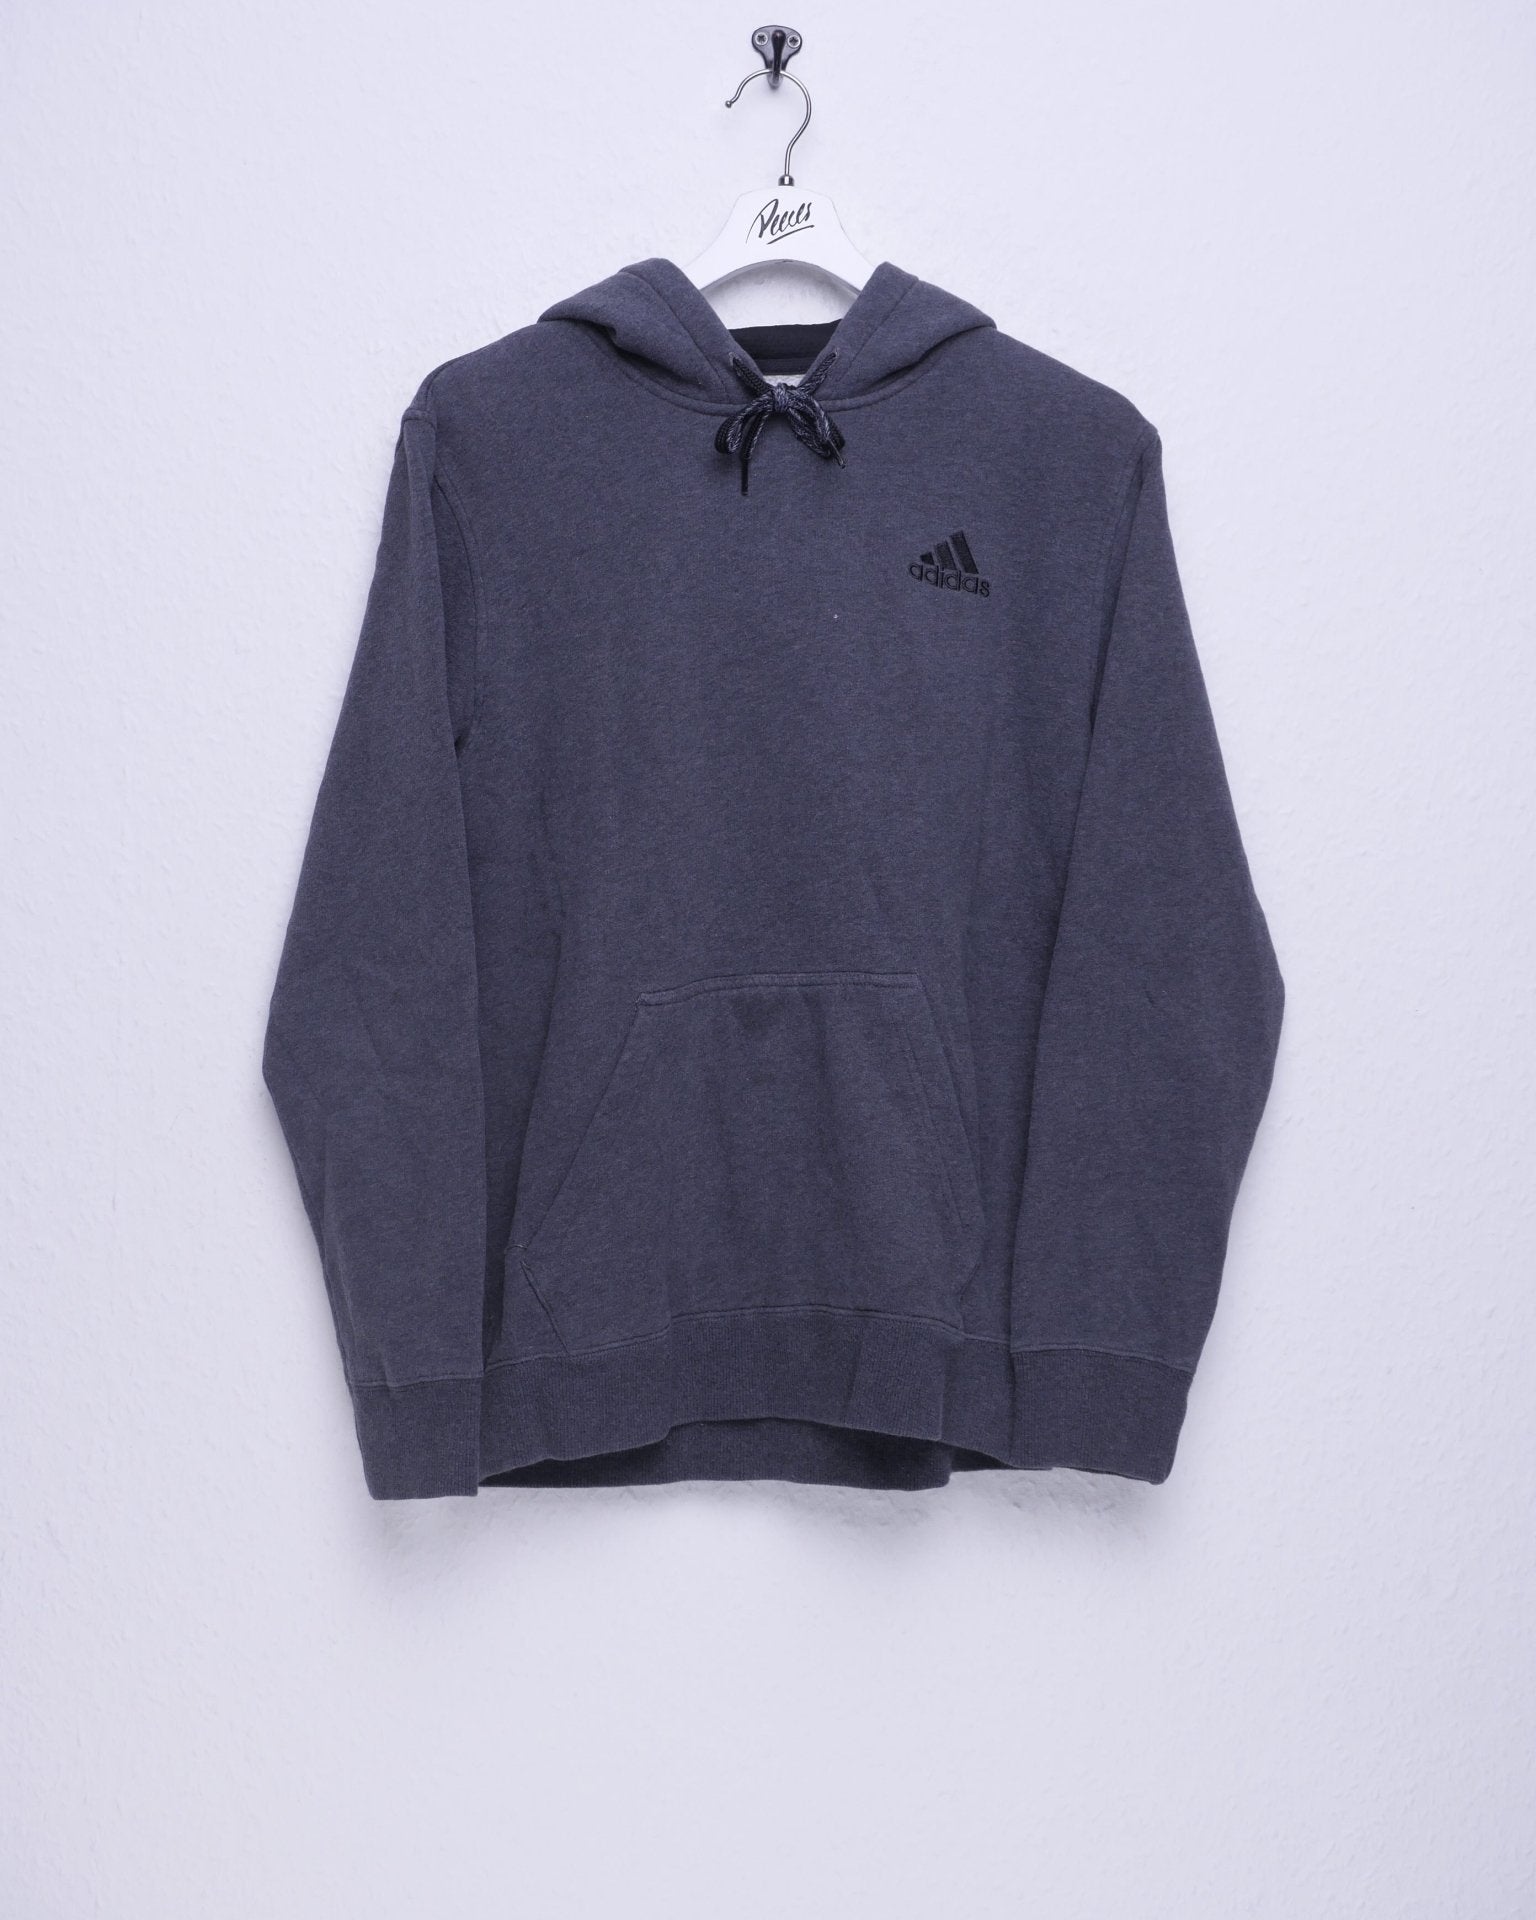 Adidas embroidered Logo grey basic Hoodie - Peeces